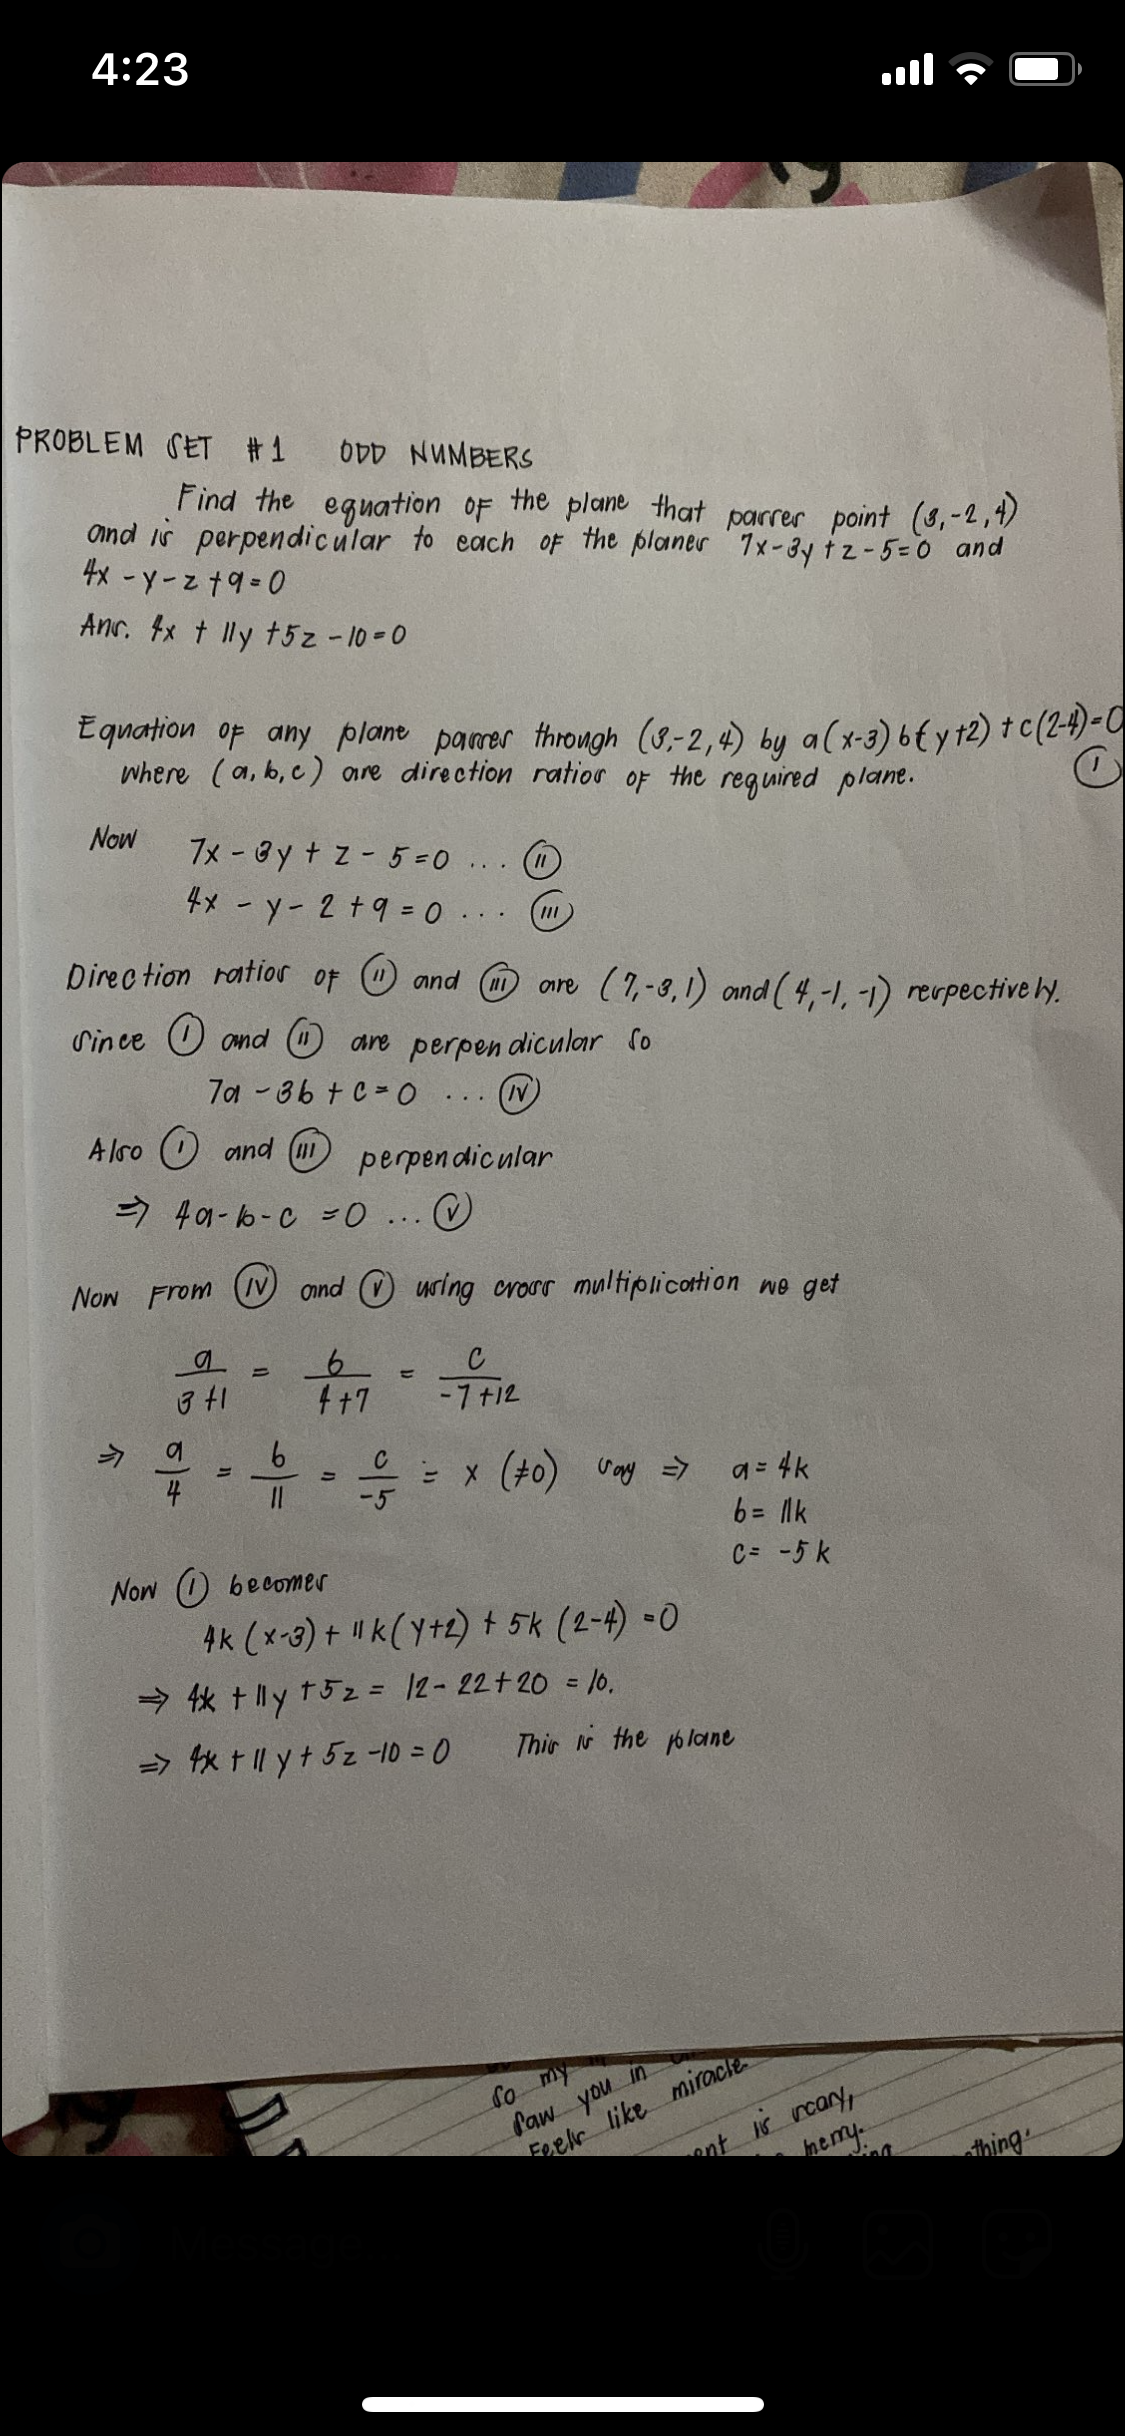 4:23
ןוו.
PROBLEM SET #1
O0D NUMBERS
Find the eguation OF the plane that parrer point (8,-2,4)
and is perpendicular to each oF the planer 7x-3y tz-5=0 and
4x - y-z t9-0
Anr. fx t lly t5z -10-0
E quation of any plane pamer through (8-2,4) by a (x-3) 6t y 12) t c (2-4)-0
Where (a, b, c) are direction ratior of the reg uired plane.
Now
7x - By + z - 5=0
4x - y- 2 +9 =..
...
Direc tion ratios of O and (H
ore (7,-8,1) and (4,-1, -1) revpective ly.
Since O omd O are perpen dicular fo
7a-86 + C 0 ... (N)
A lso O and (m
perpen dicular
> 401- b-C =o ..
Now From N onnd O uring croor multiplicottion wo get
4+7
-7 +12
う 4
6.
4
a = 4k
6= lk
-5
C= -5 k
Now (の 6ecomer
4k (x-3) + "k(y+2) + 5k (2-4) -0
→依tly t52= I2-122+20 = 10.
=> x tl yt5z-10 = 0
Thir N the oloane
So my
Paw you in
Foelr like miracle
ont K rcary,
aemy.
thing
